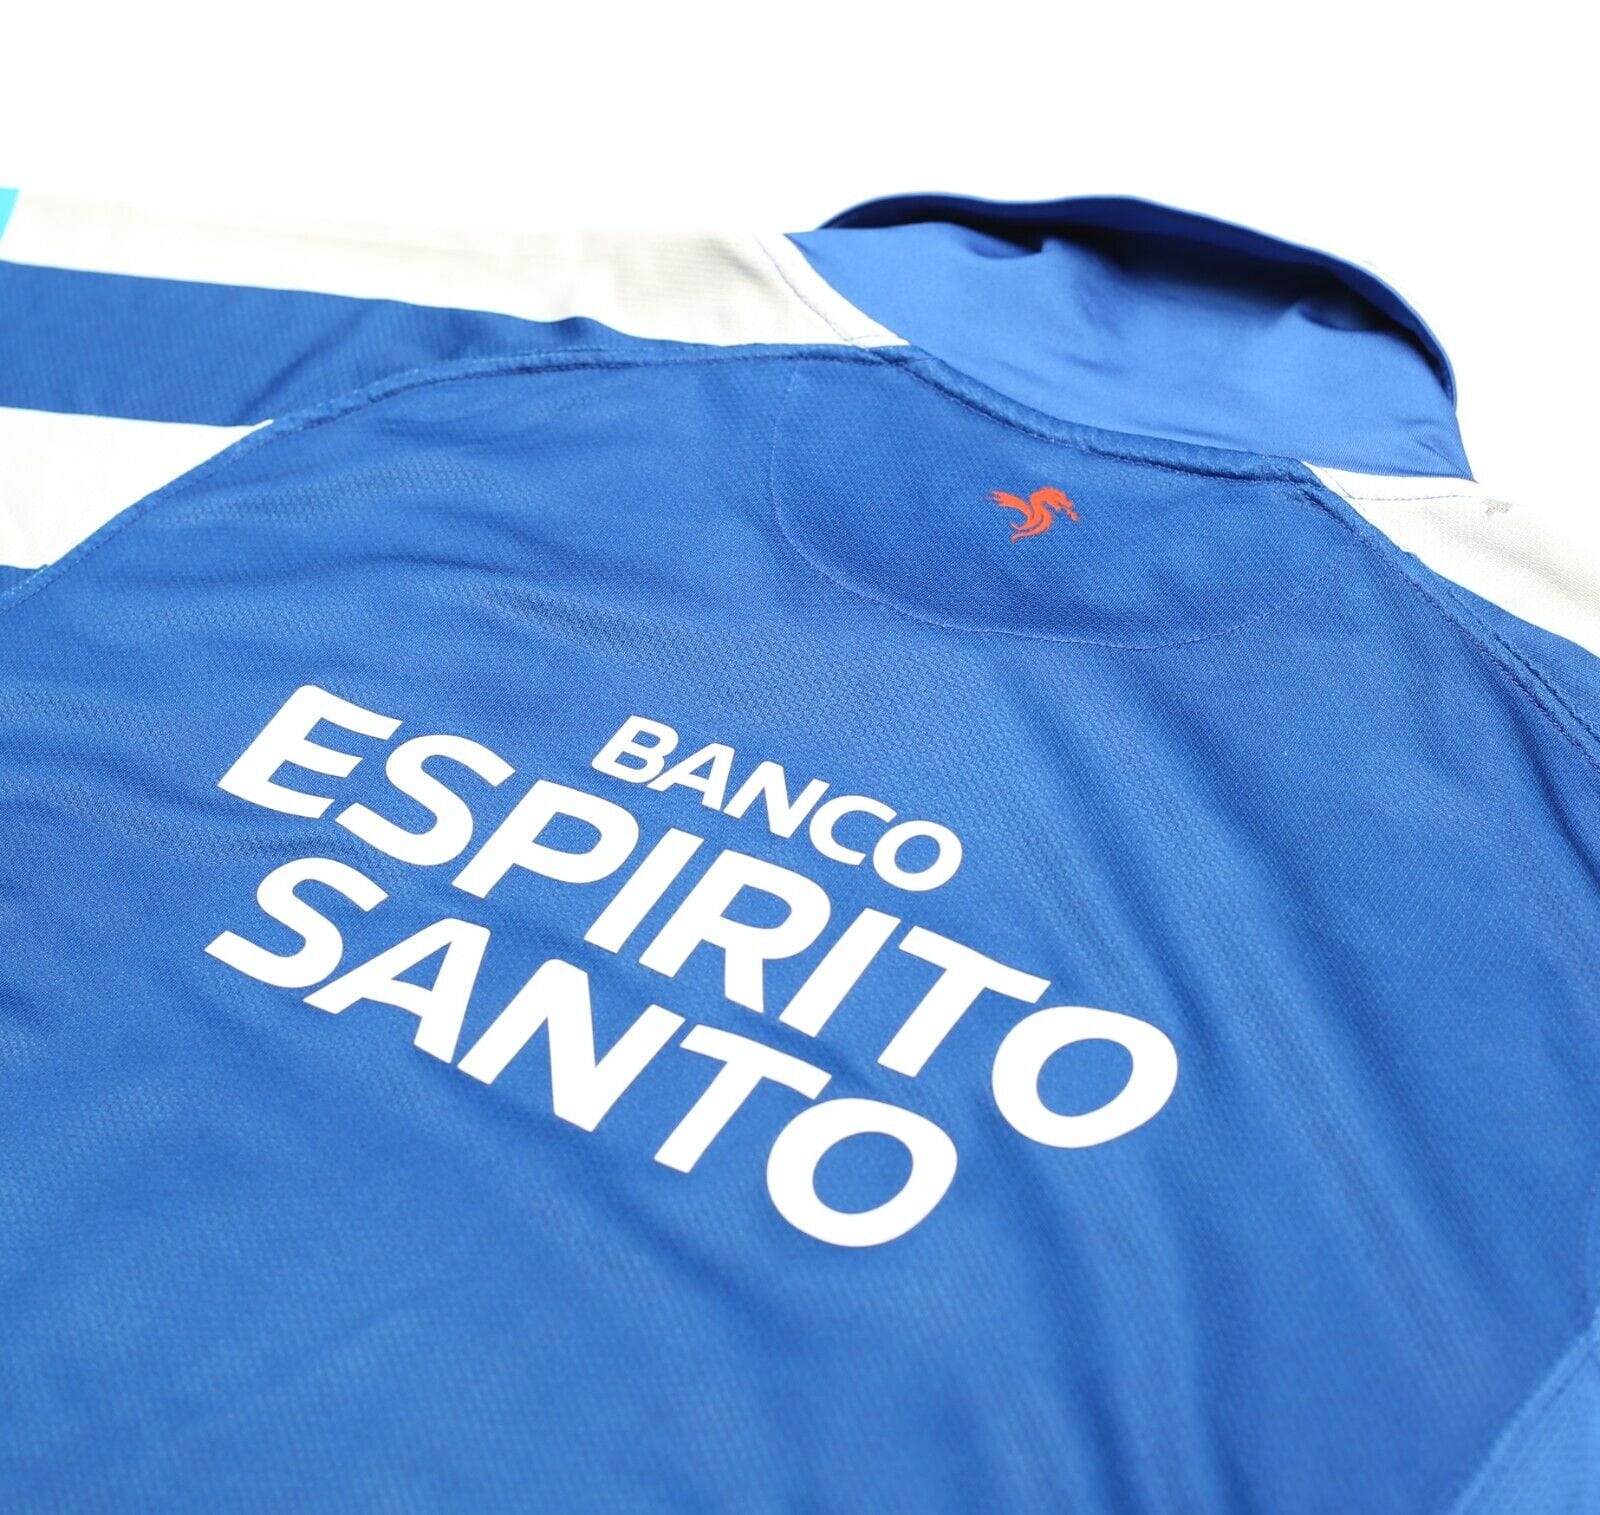 2007/08 FC PORTO Vintage Nike Football Shirt Jersey (M)